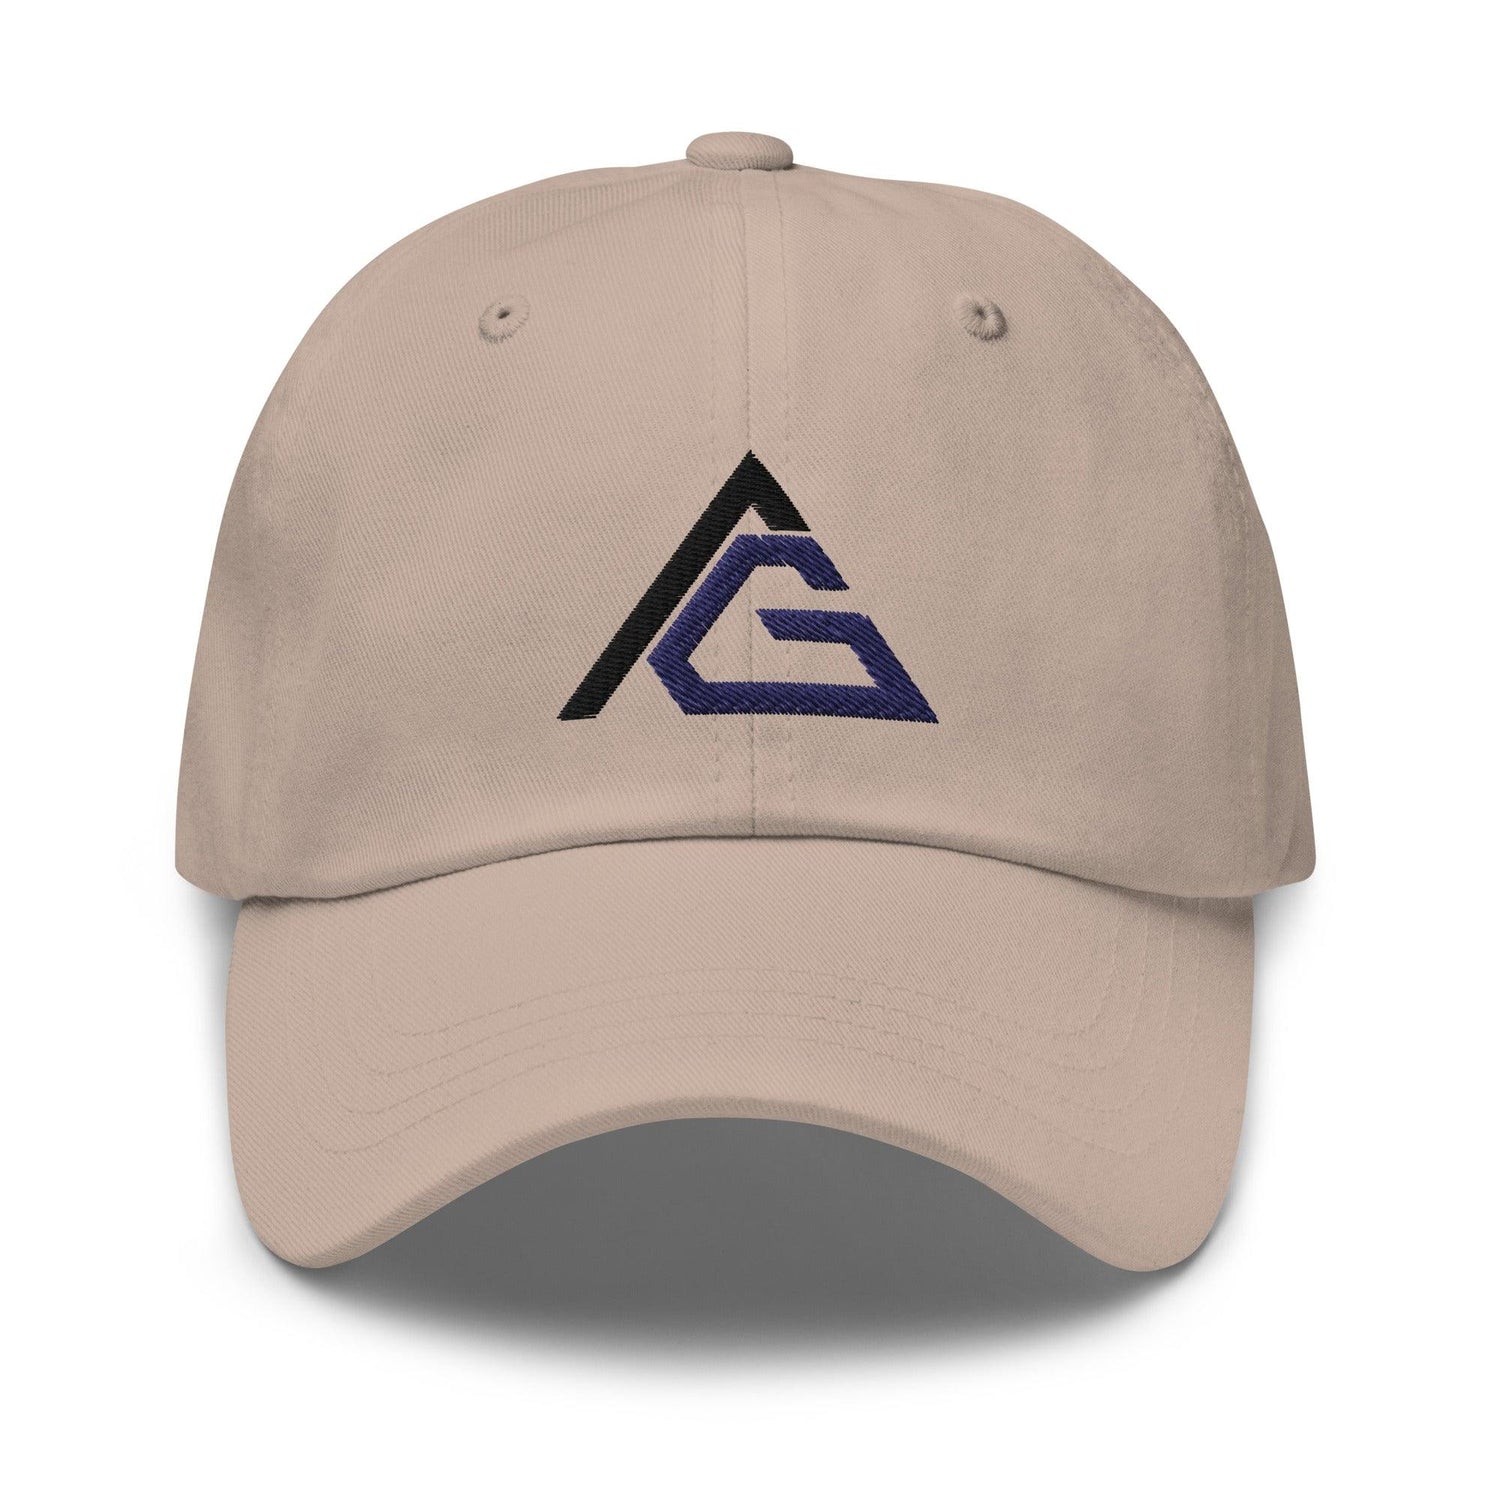 Austin Gomber "Elite" hat - Fan Arch